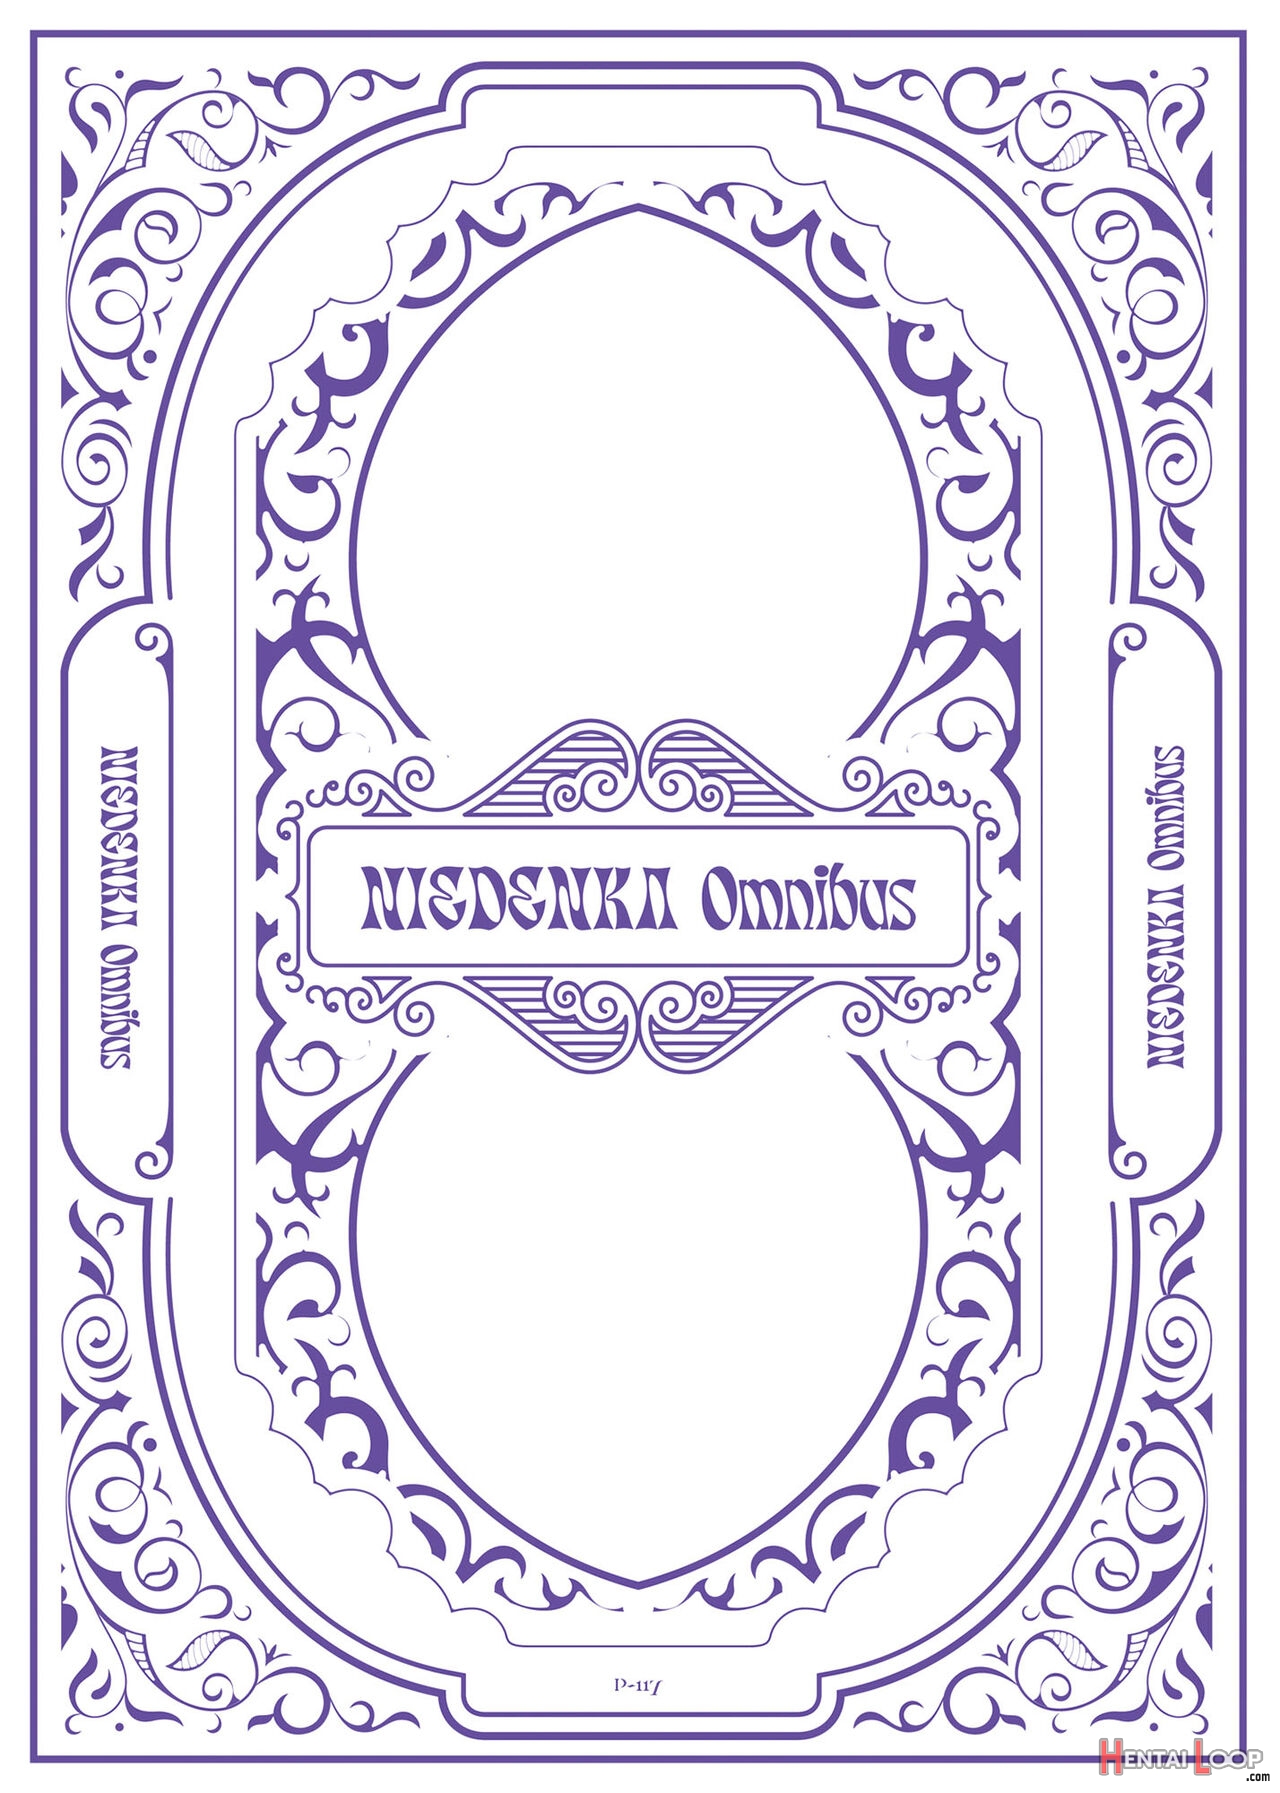 Niedenka - Sacrifice Prince Omnibus Ch. 3 page 34